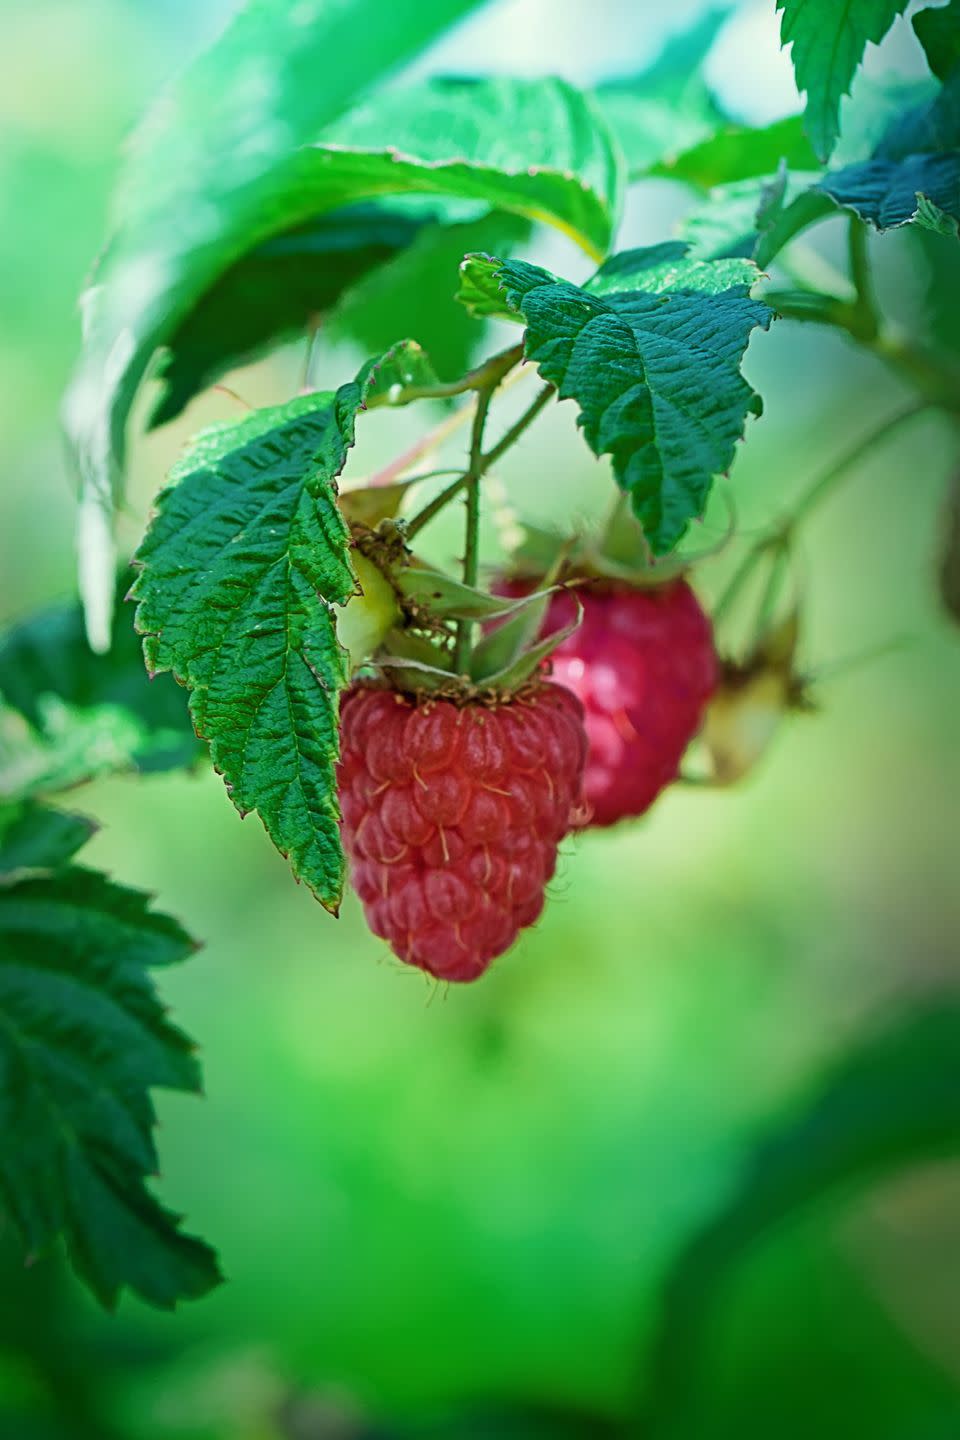 4) Raspberries